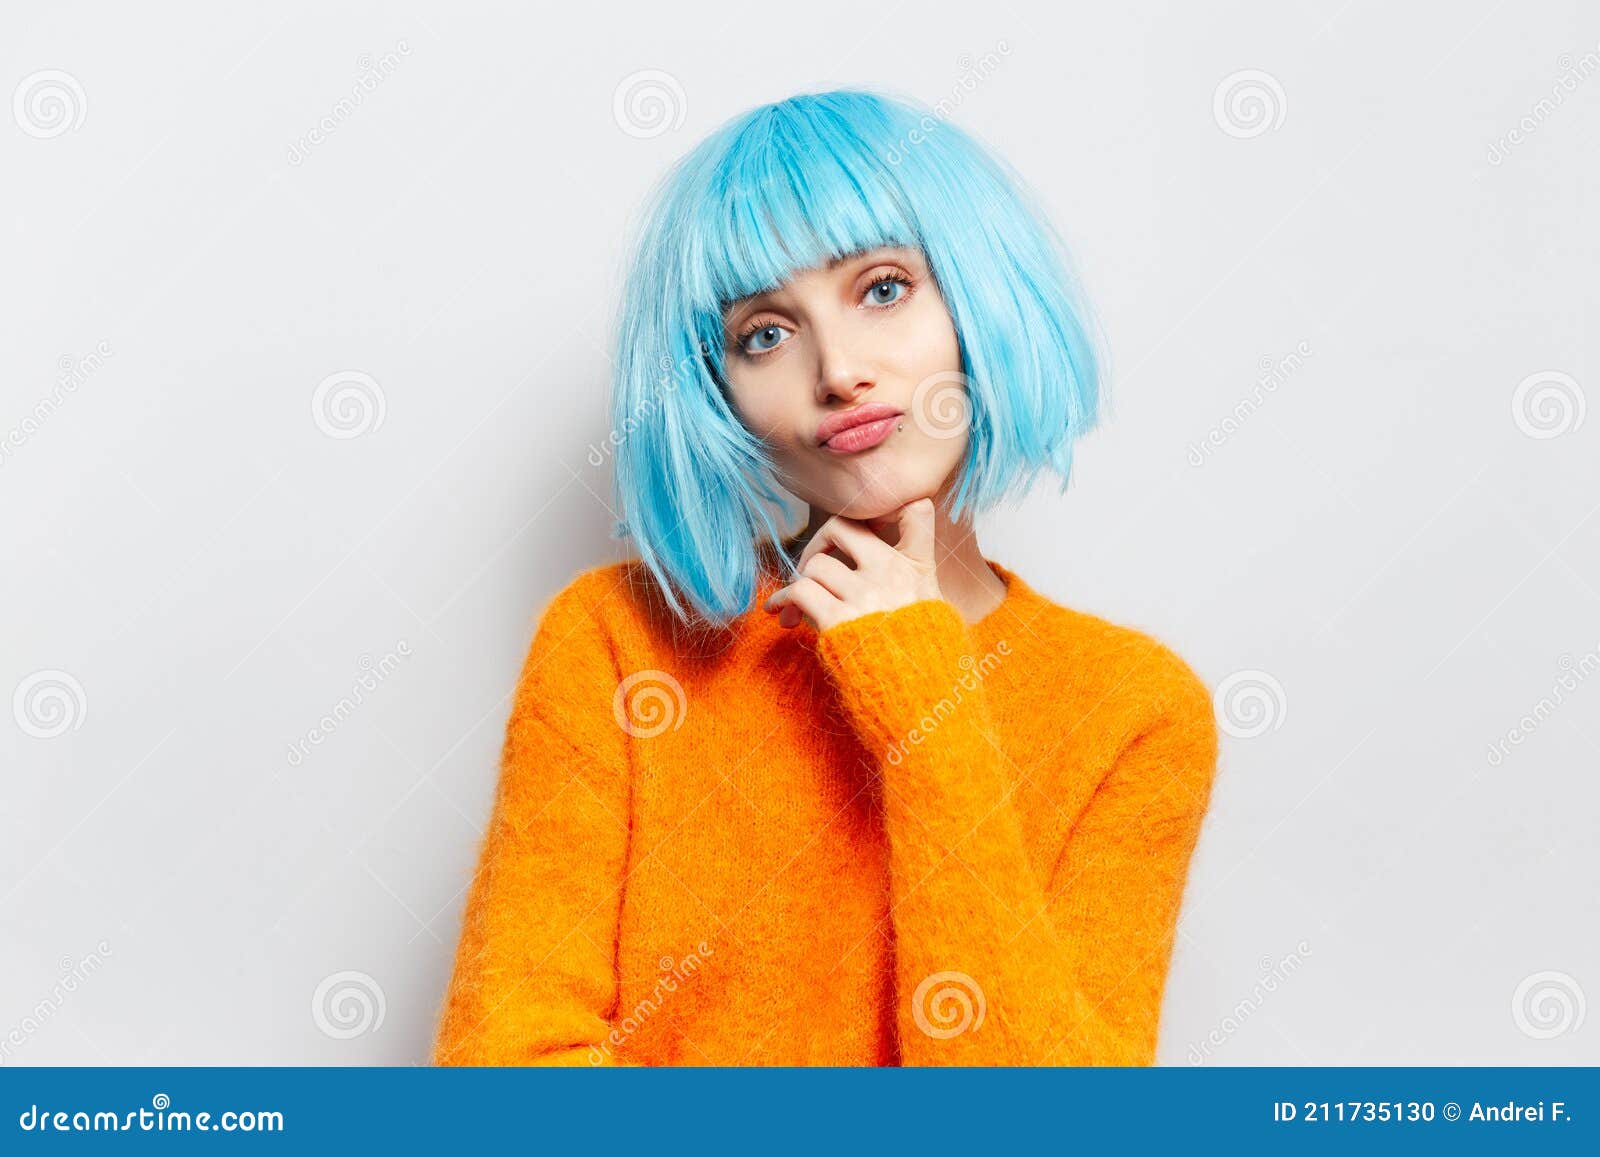 6. Picka Girl Blue Hair - Tumblr - wide 7